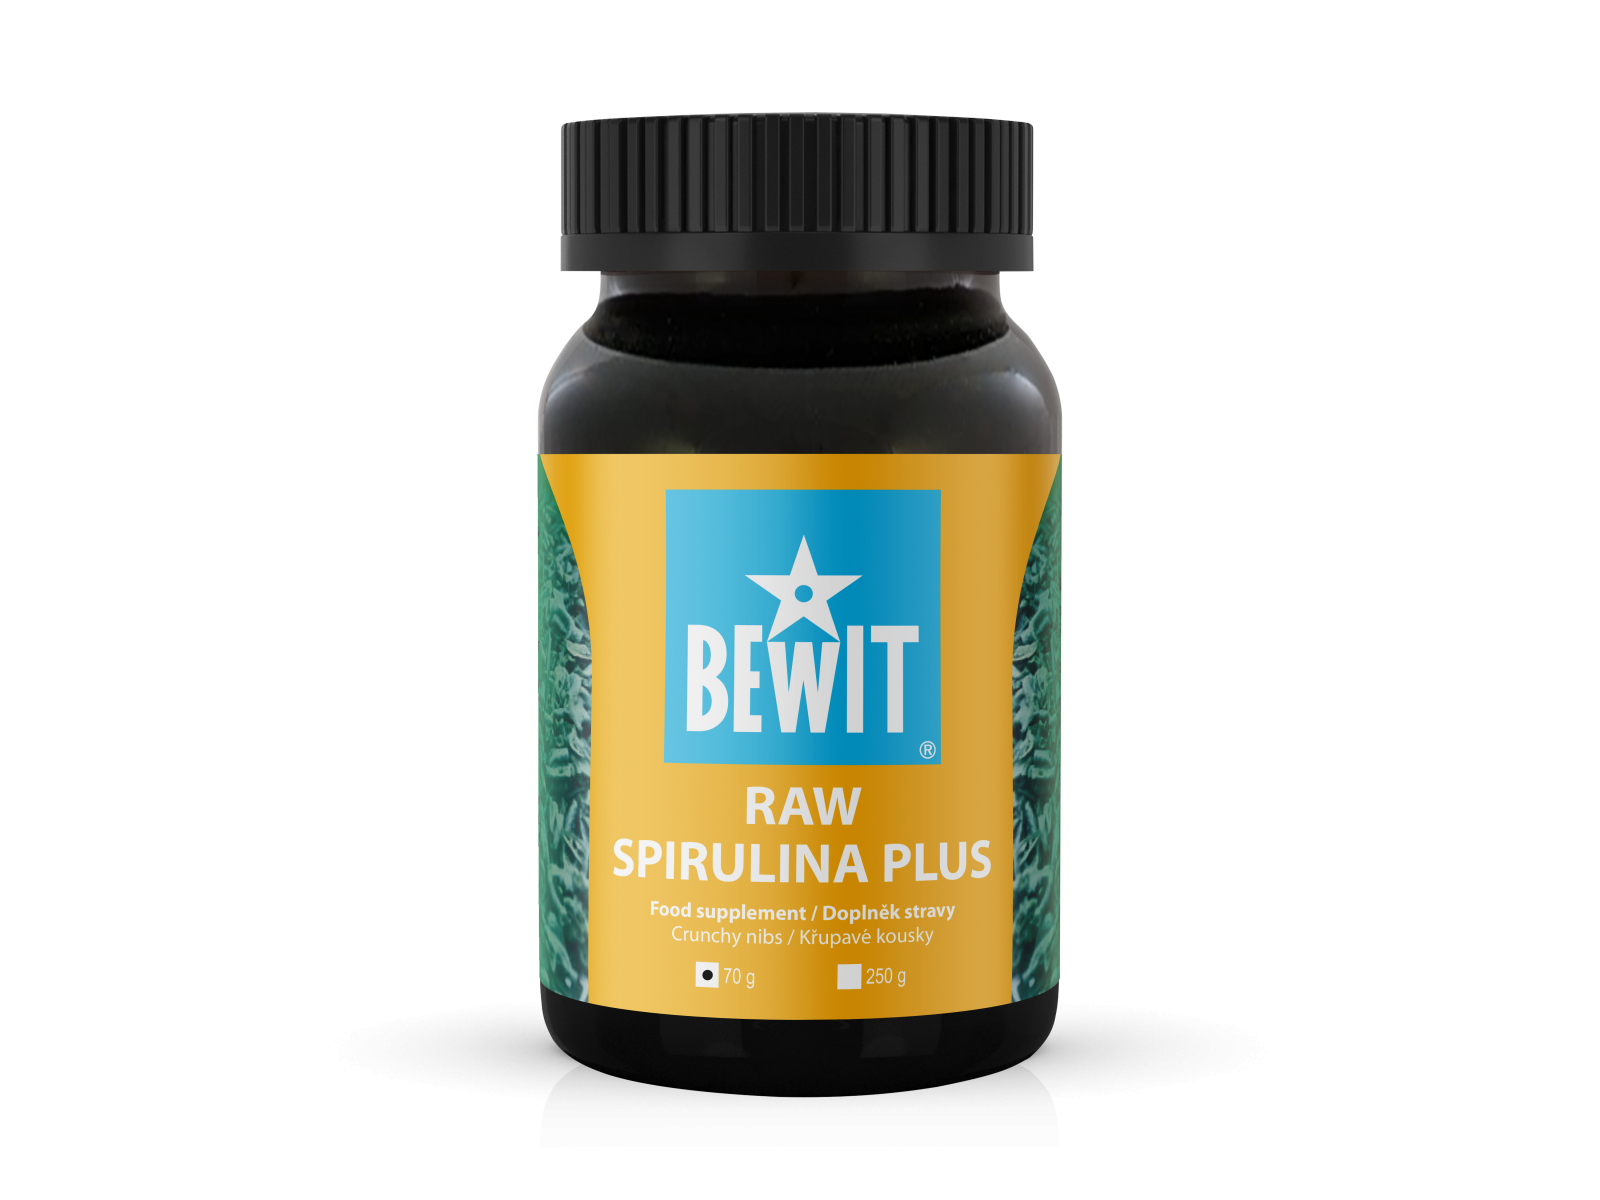 BEWIT Spirulina Plus RAW, pieces - Food supplement - 2